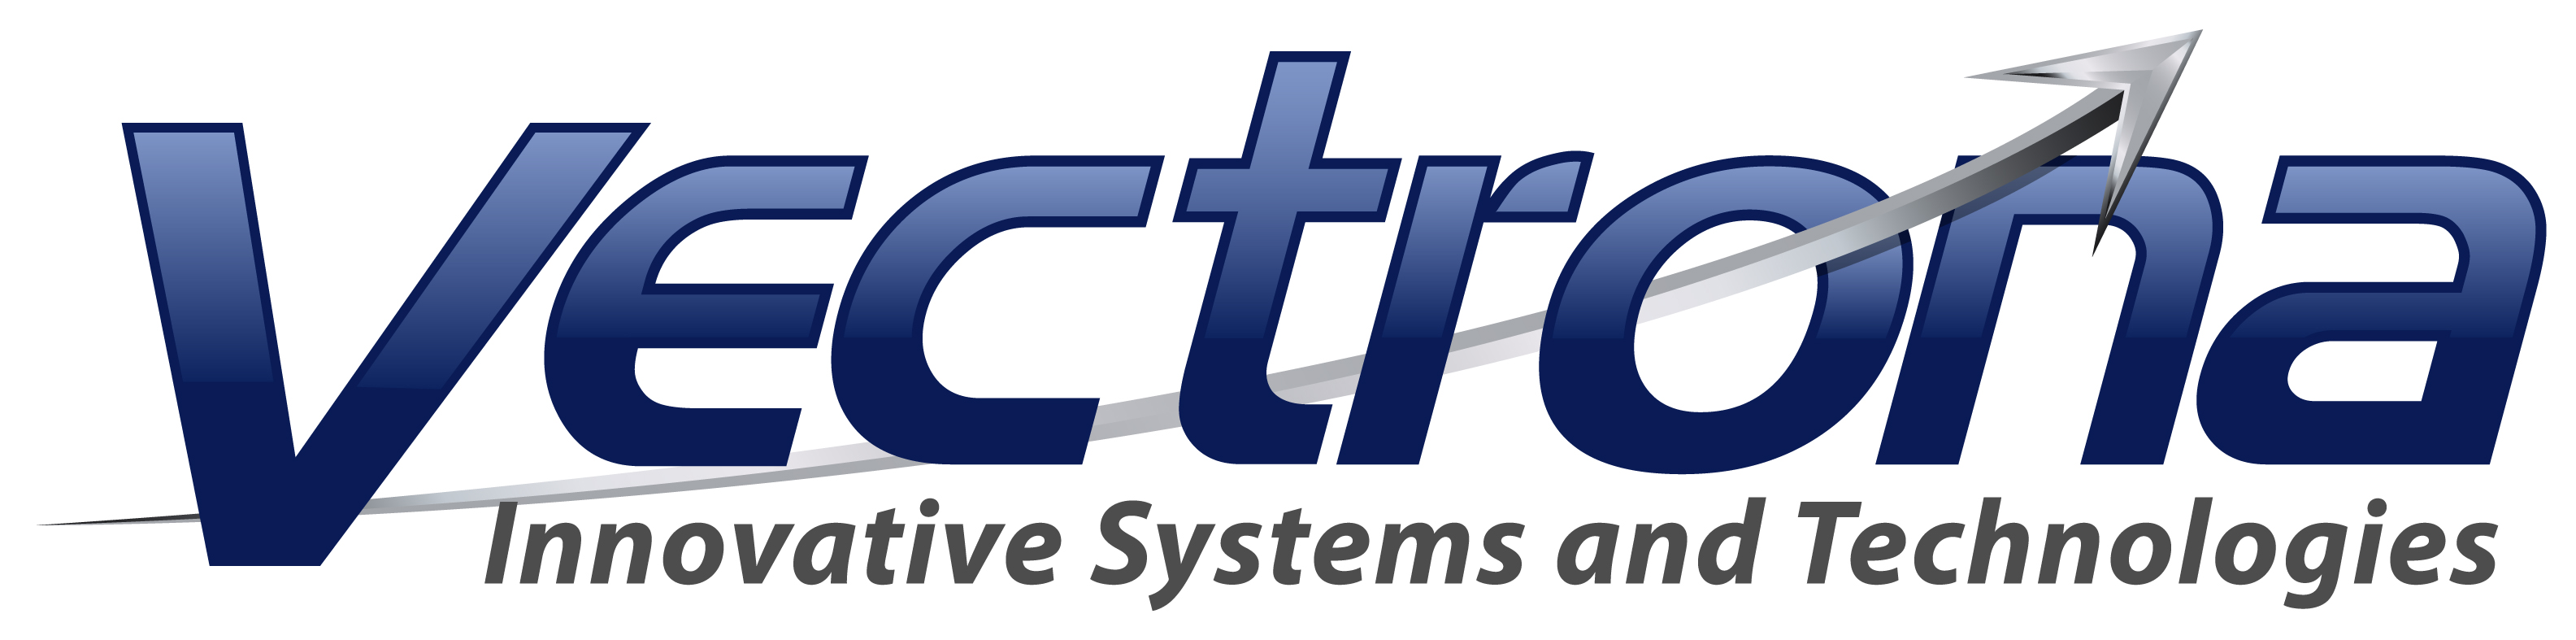 Vectrona_full logo final